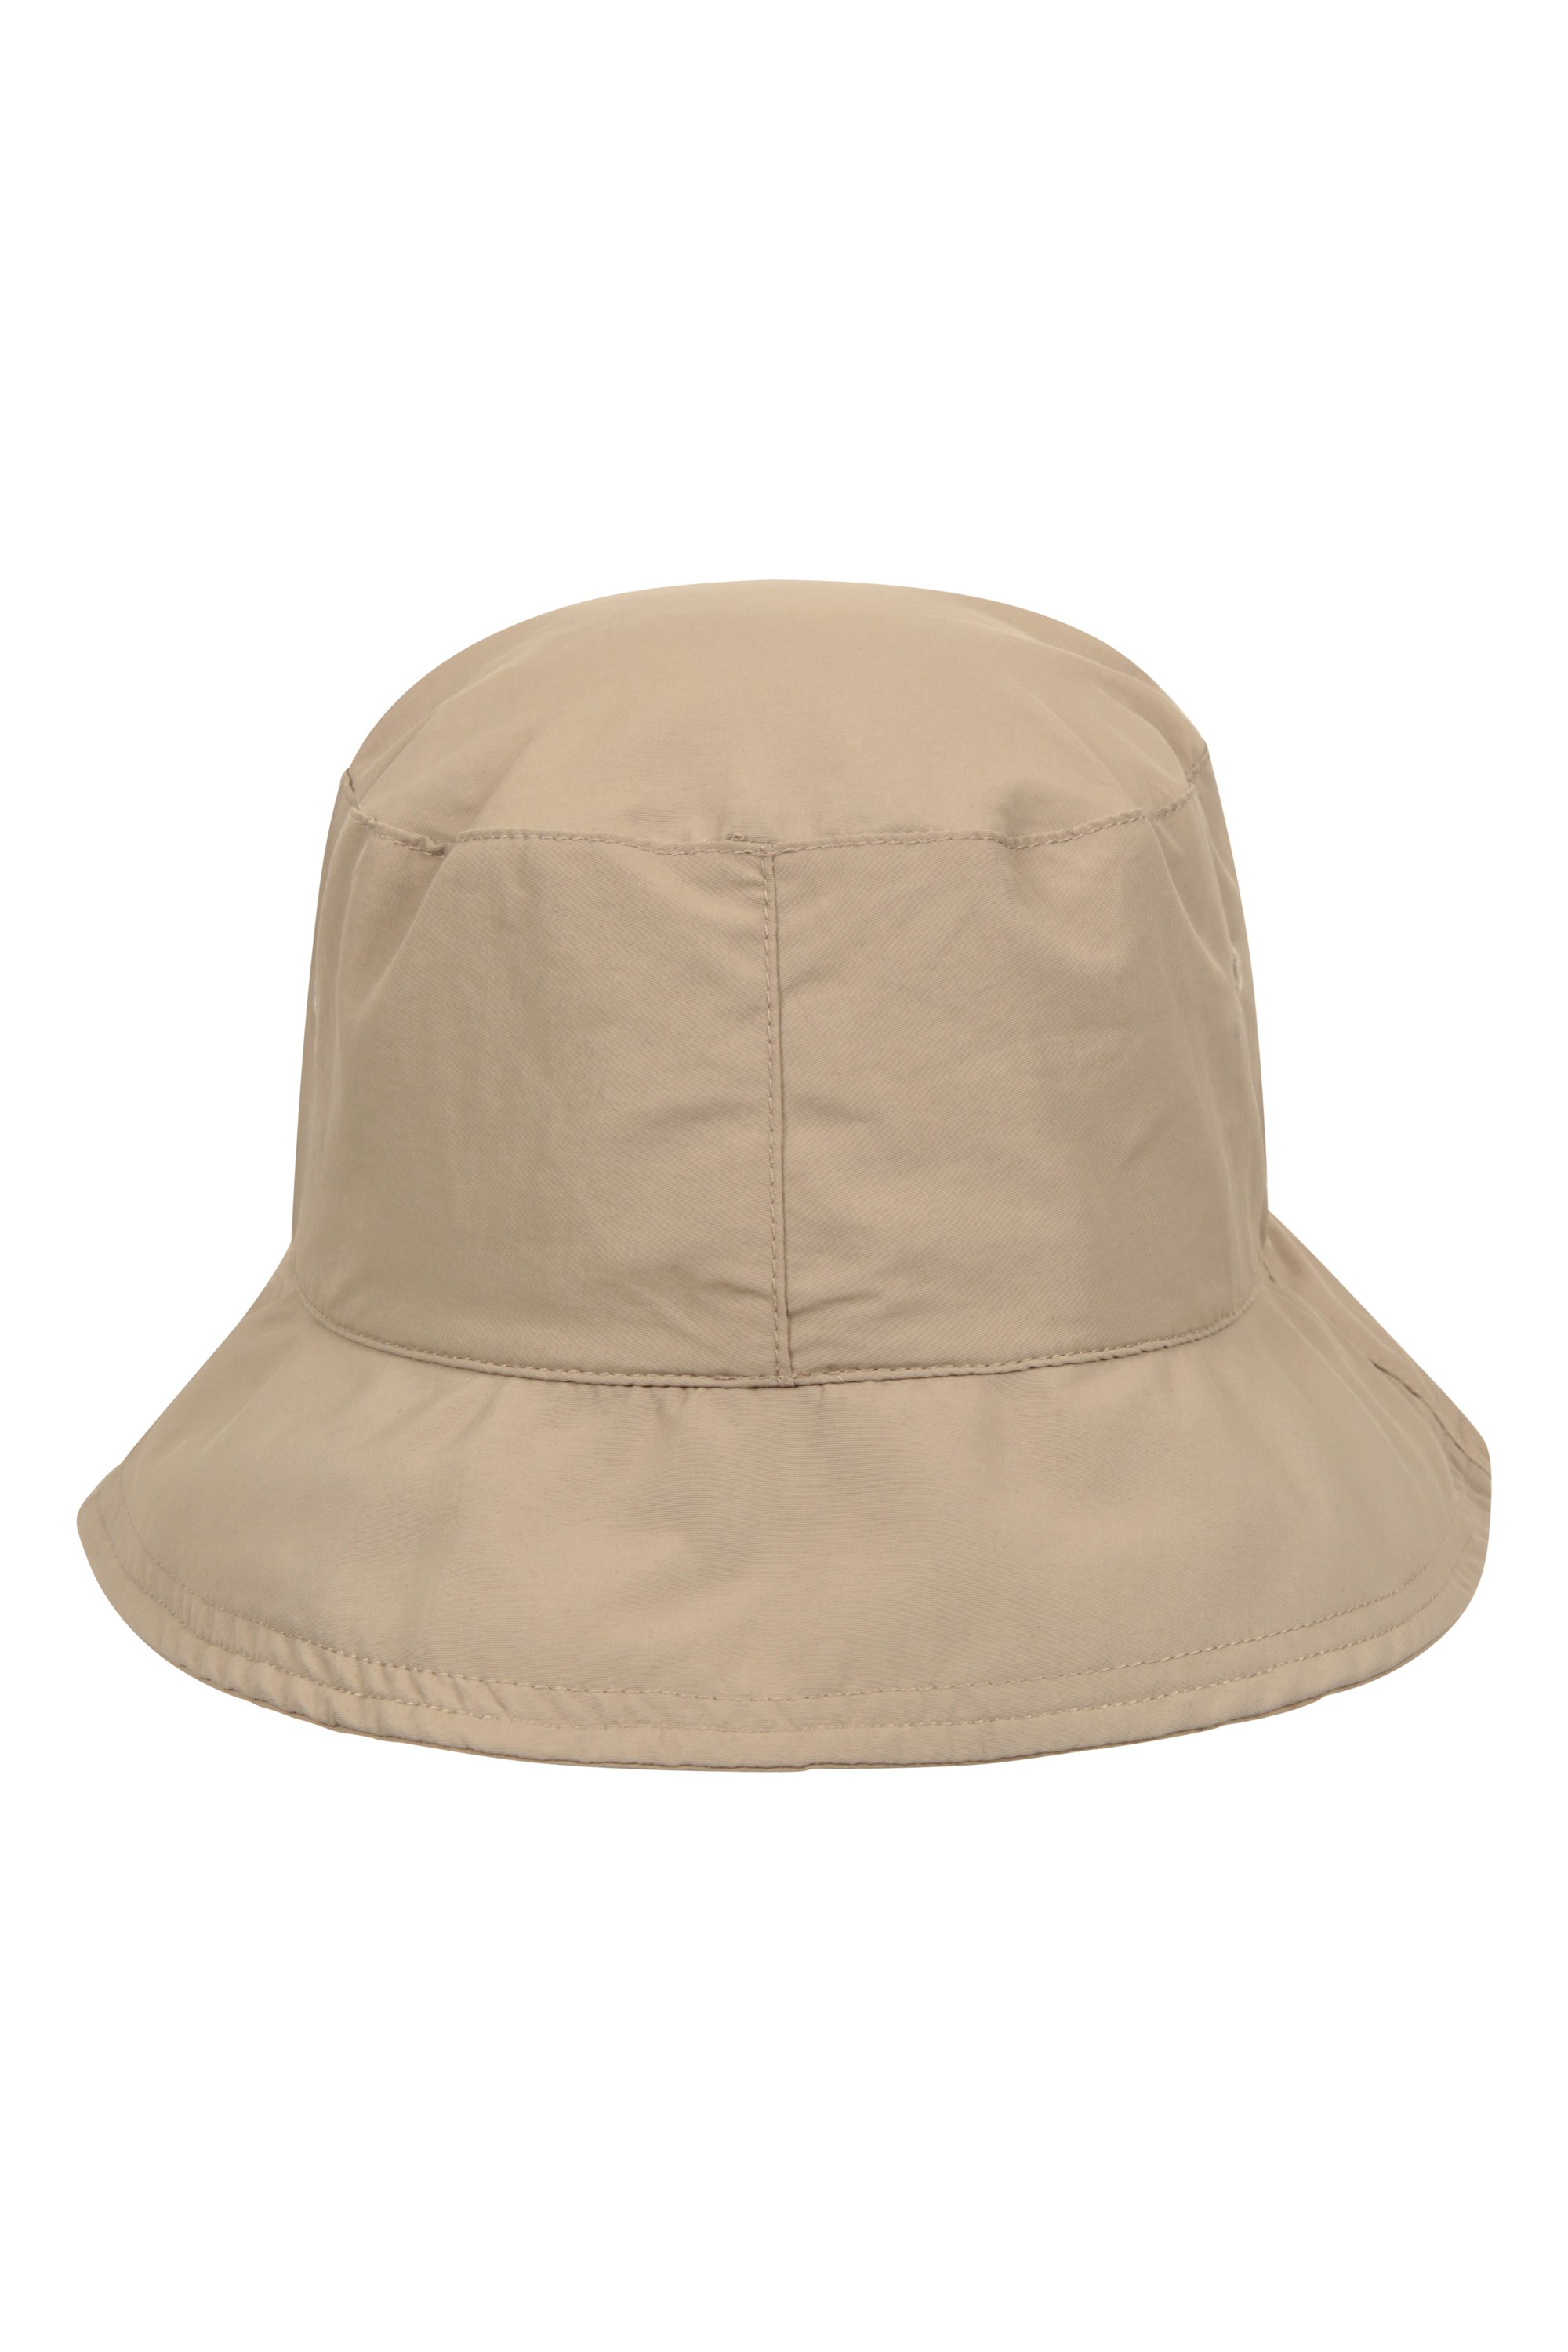 Summer Fashion Bucket Hat Men Outdoor Sun Hat Uv Protection